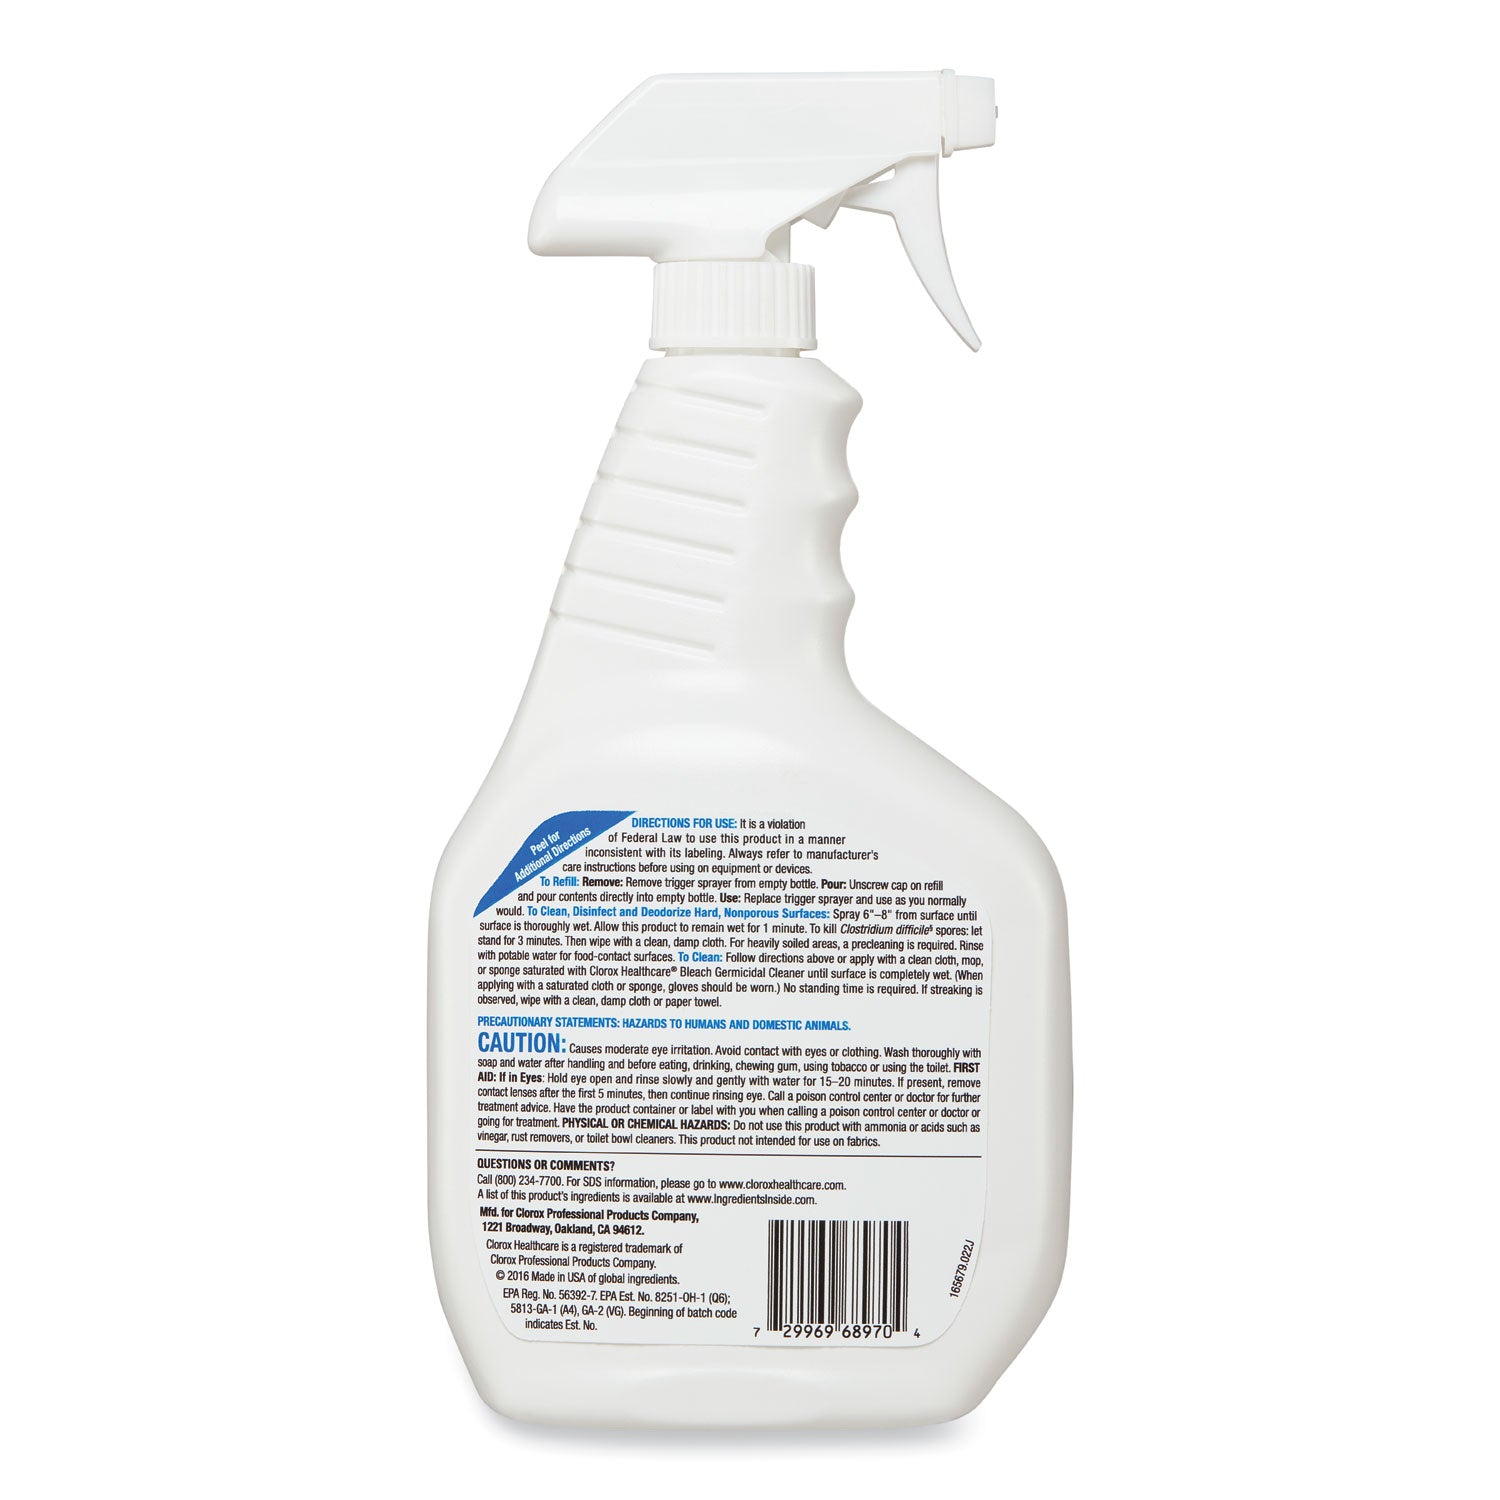 Bleach Germicidal Cleaner, 32 oz Spray Bottle - 